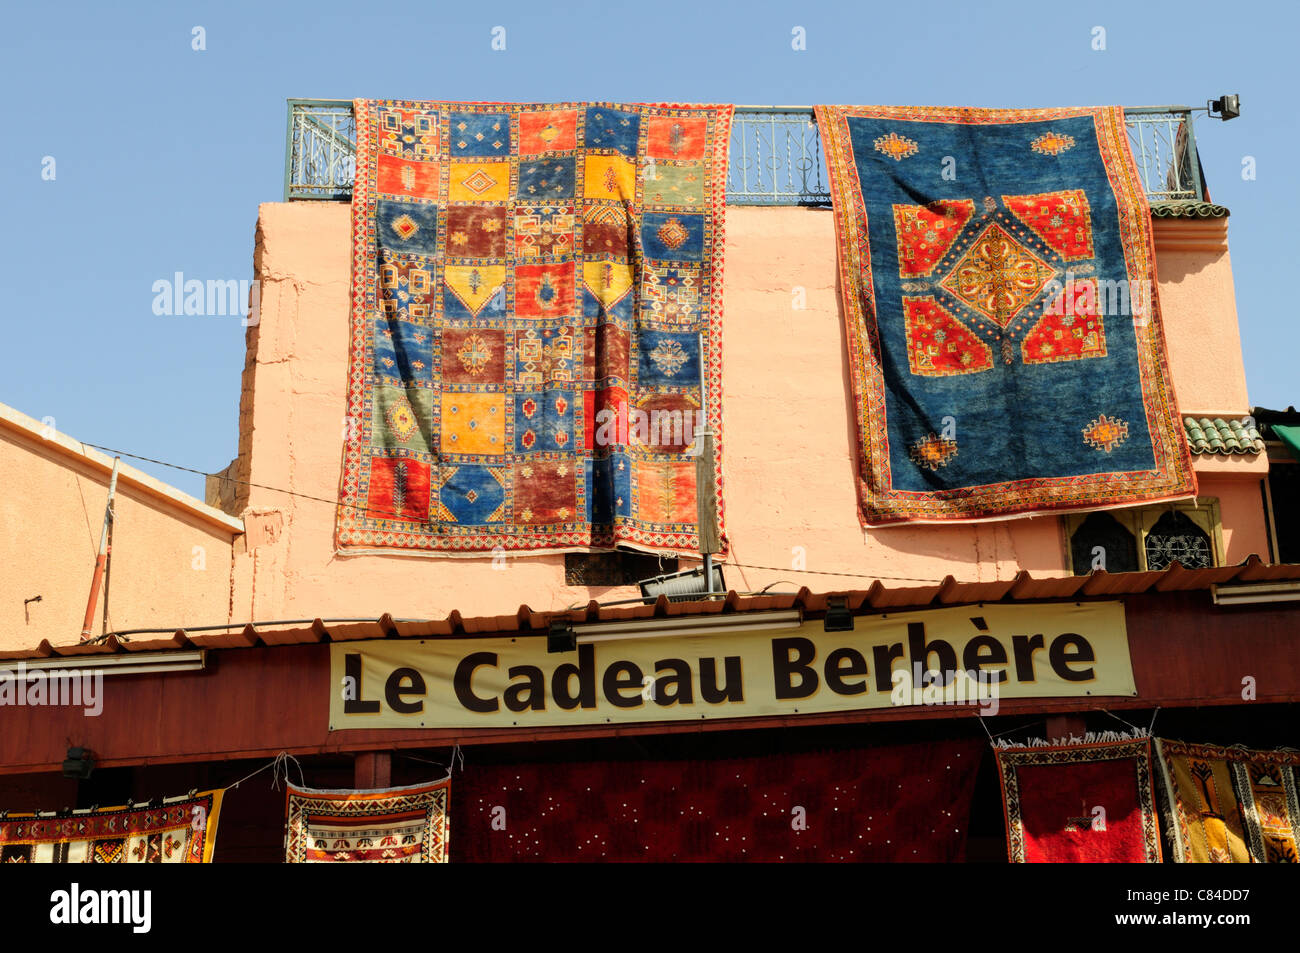 Le Cadeau Berbere Carpet Shop, Place Djemaa el Fna, Marrakech, Morocco  Stock Photo - Alamy